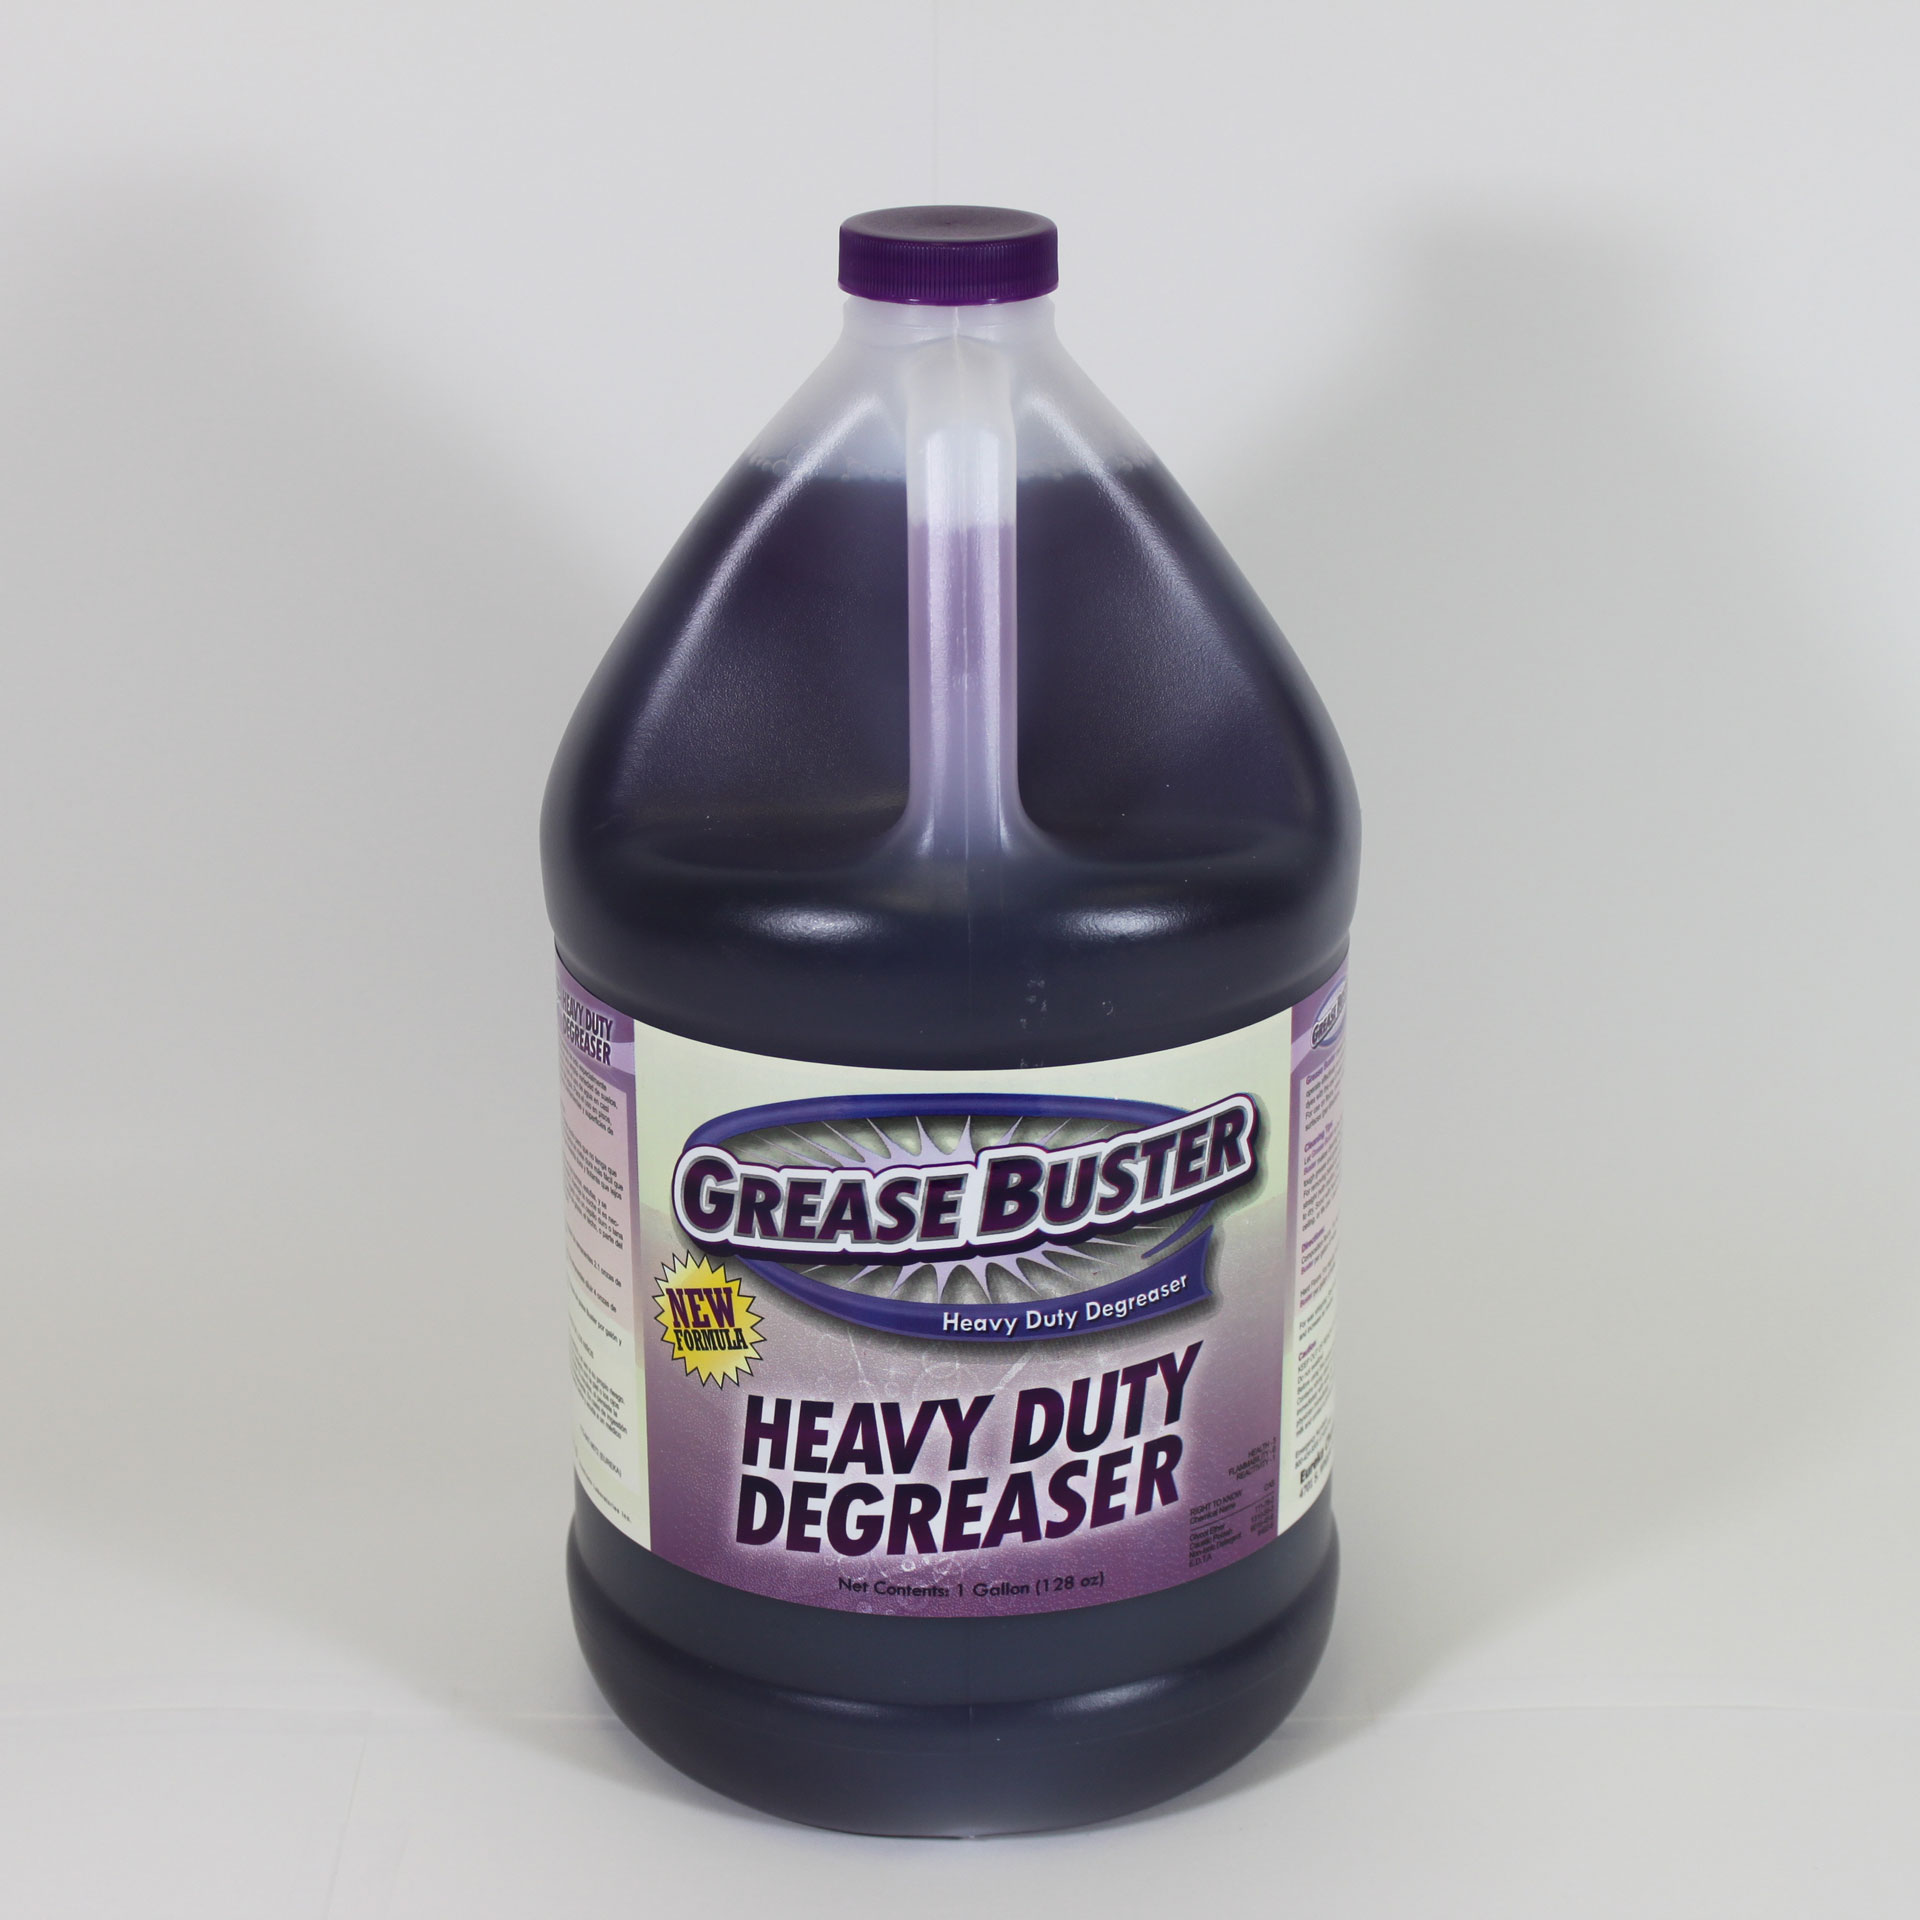 Bottle of Grease Buster heavy duty degreaser